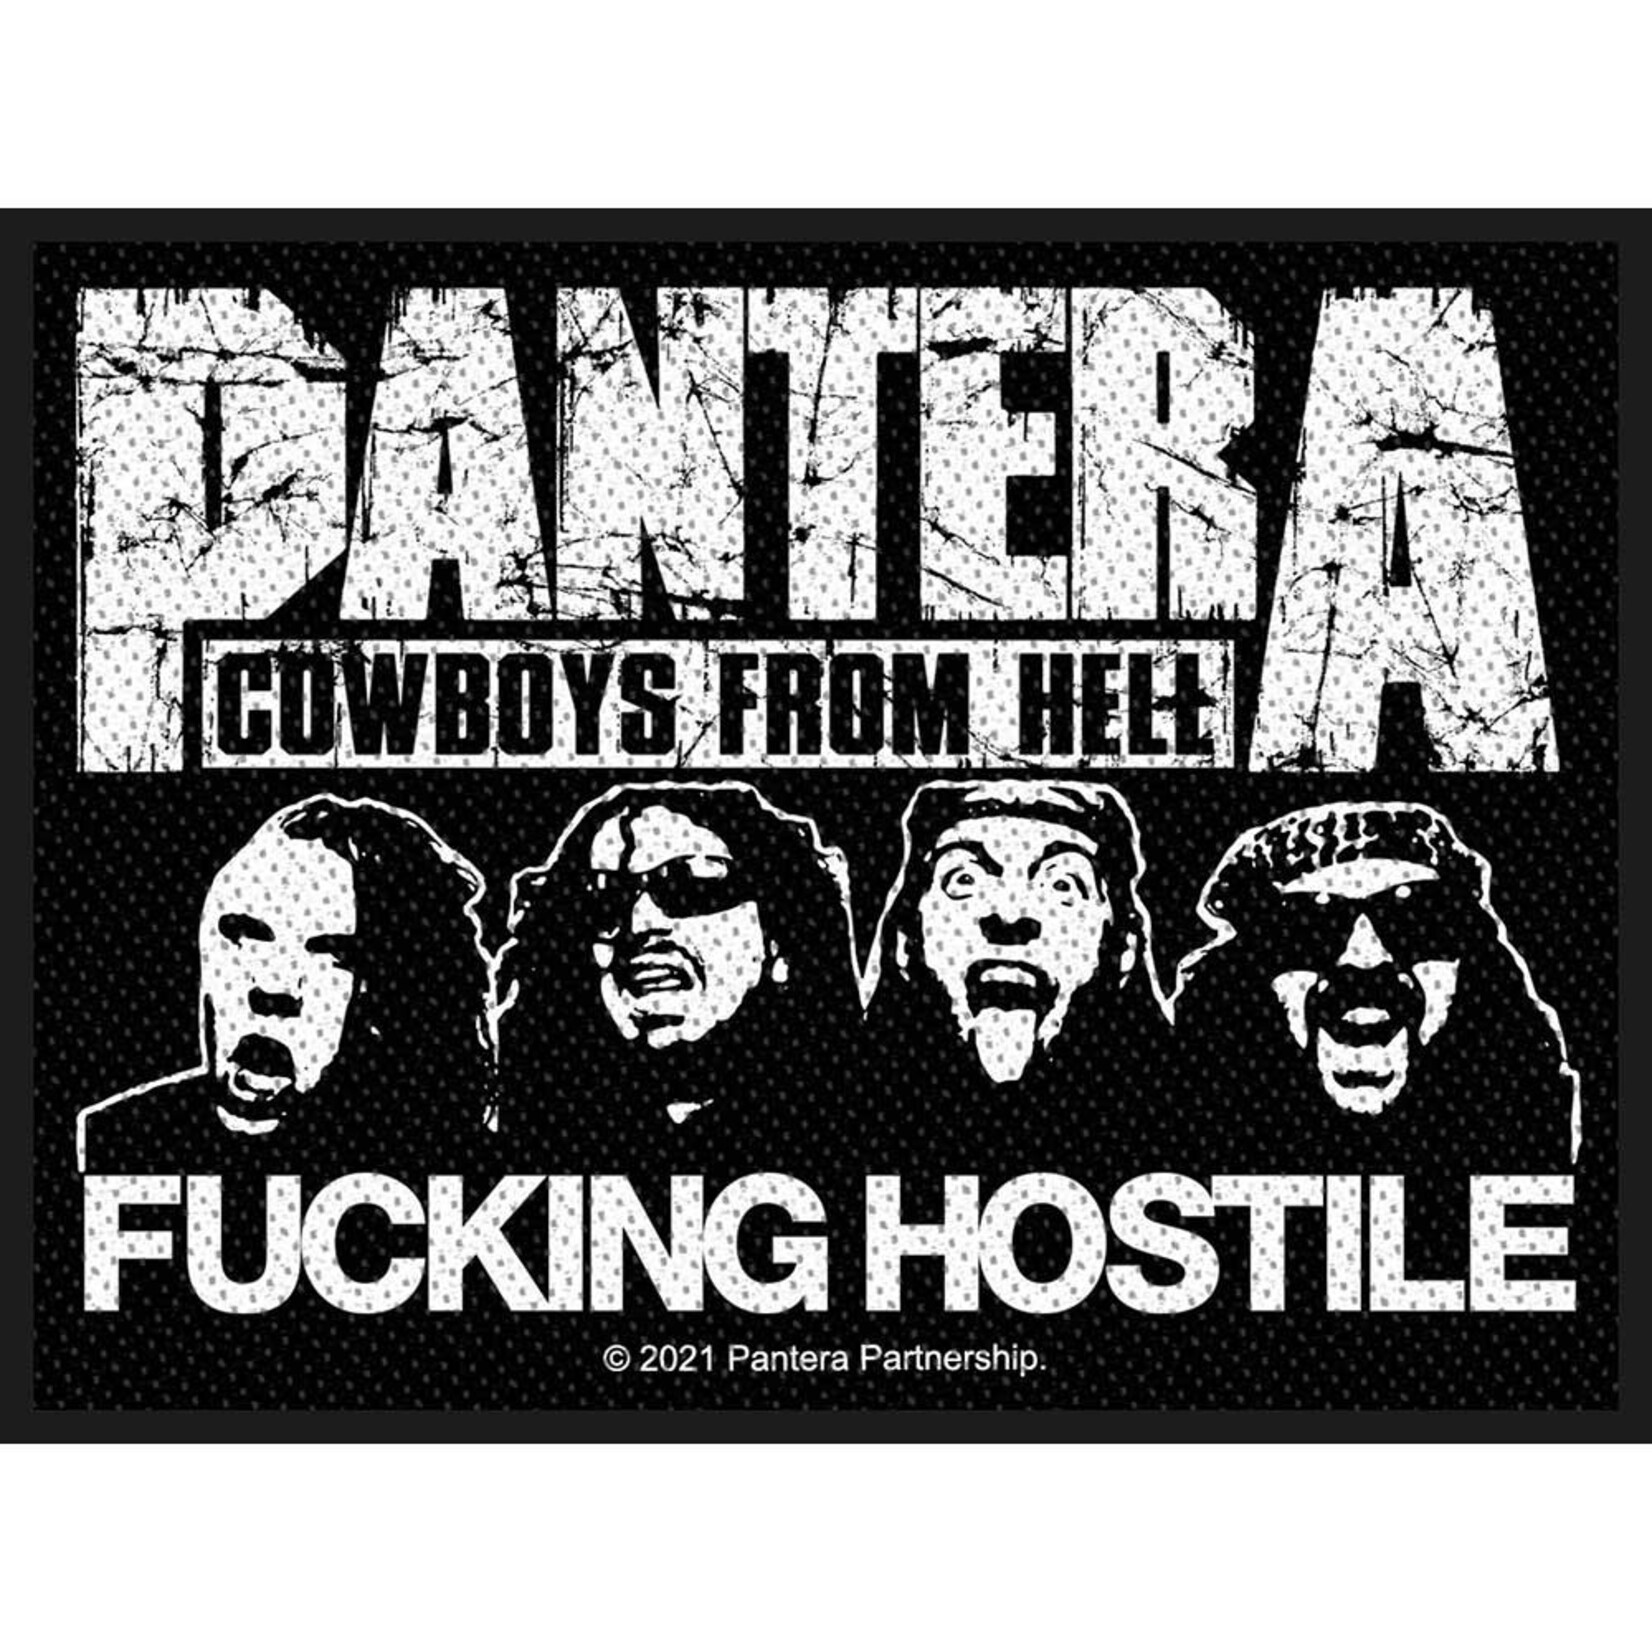 Patch - Pantera: Fucking Hostile